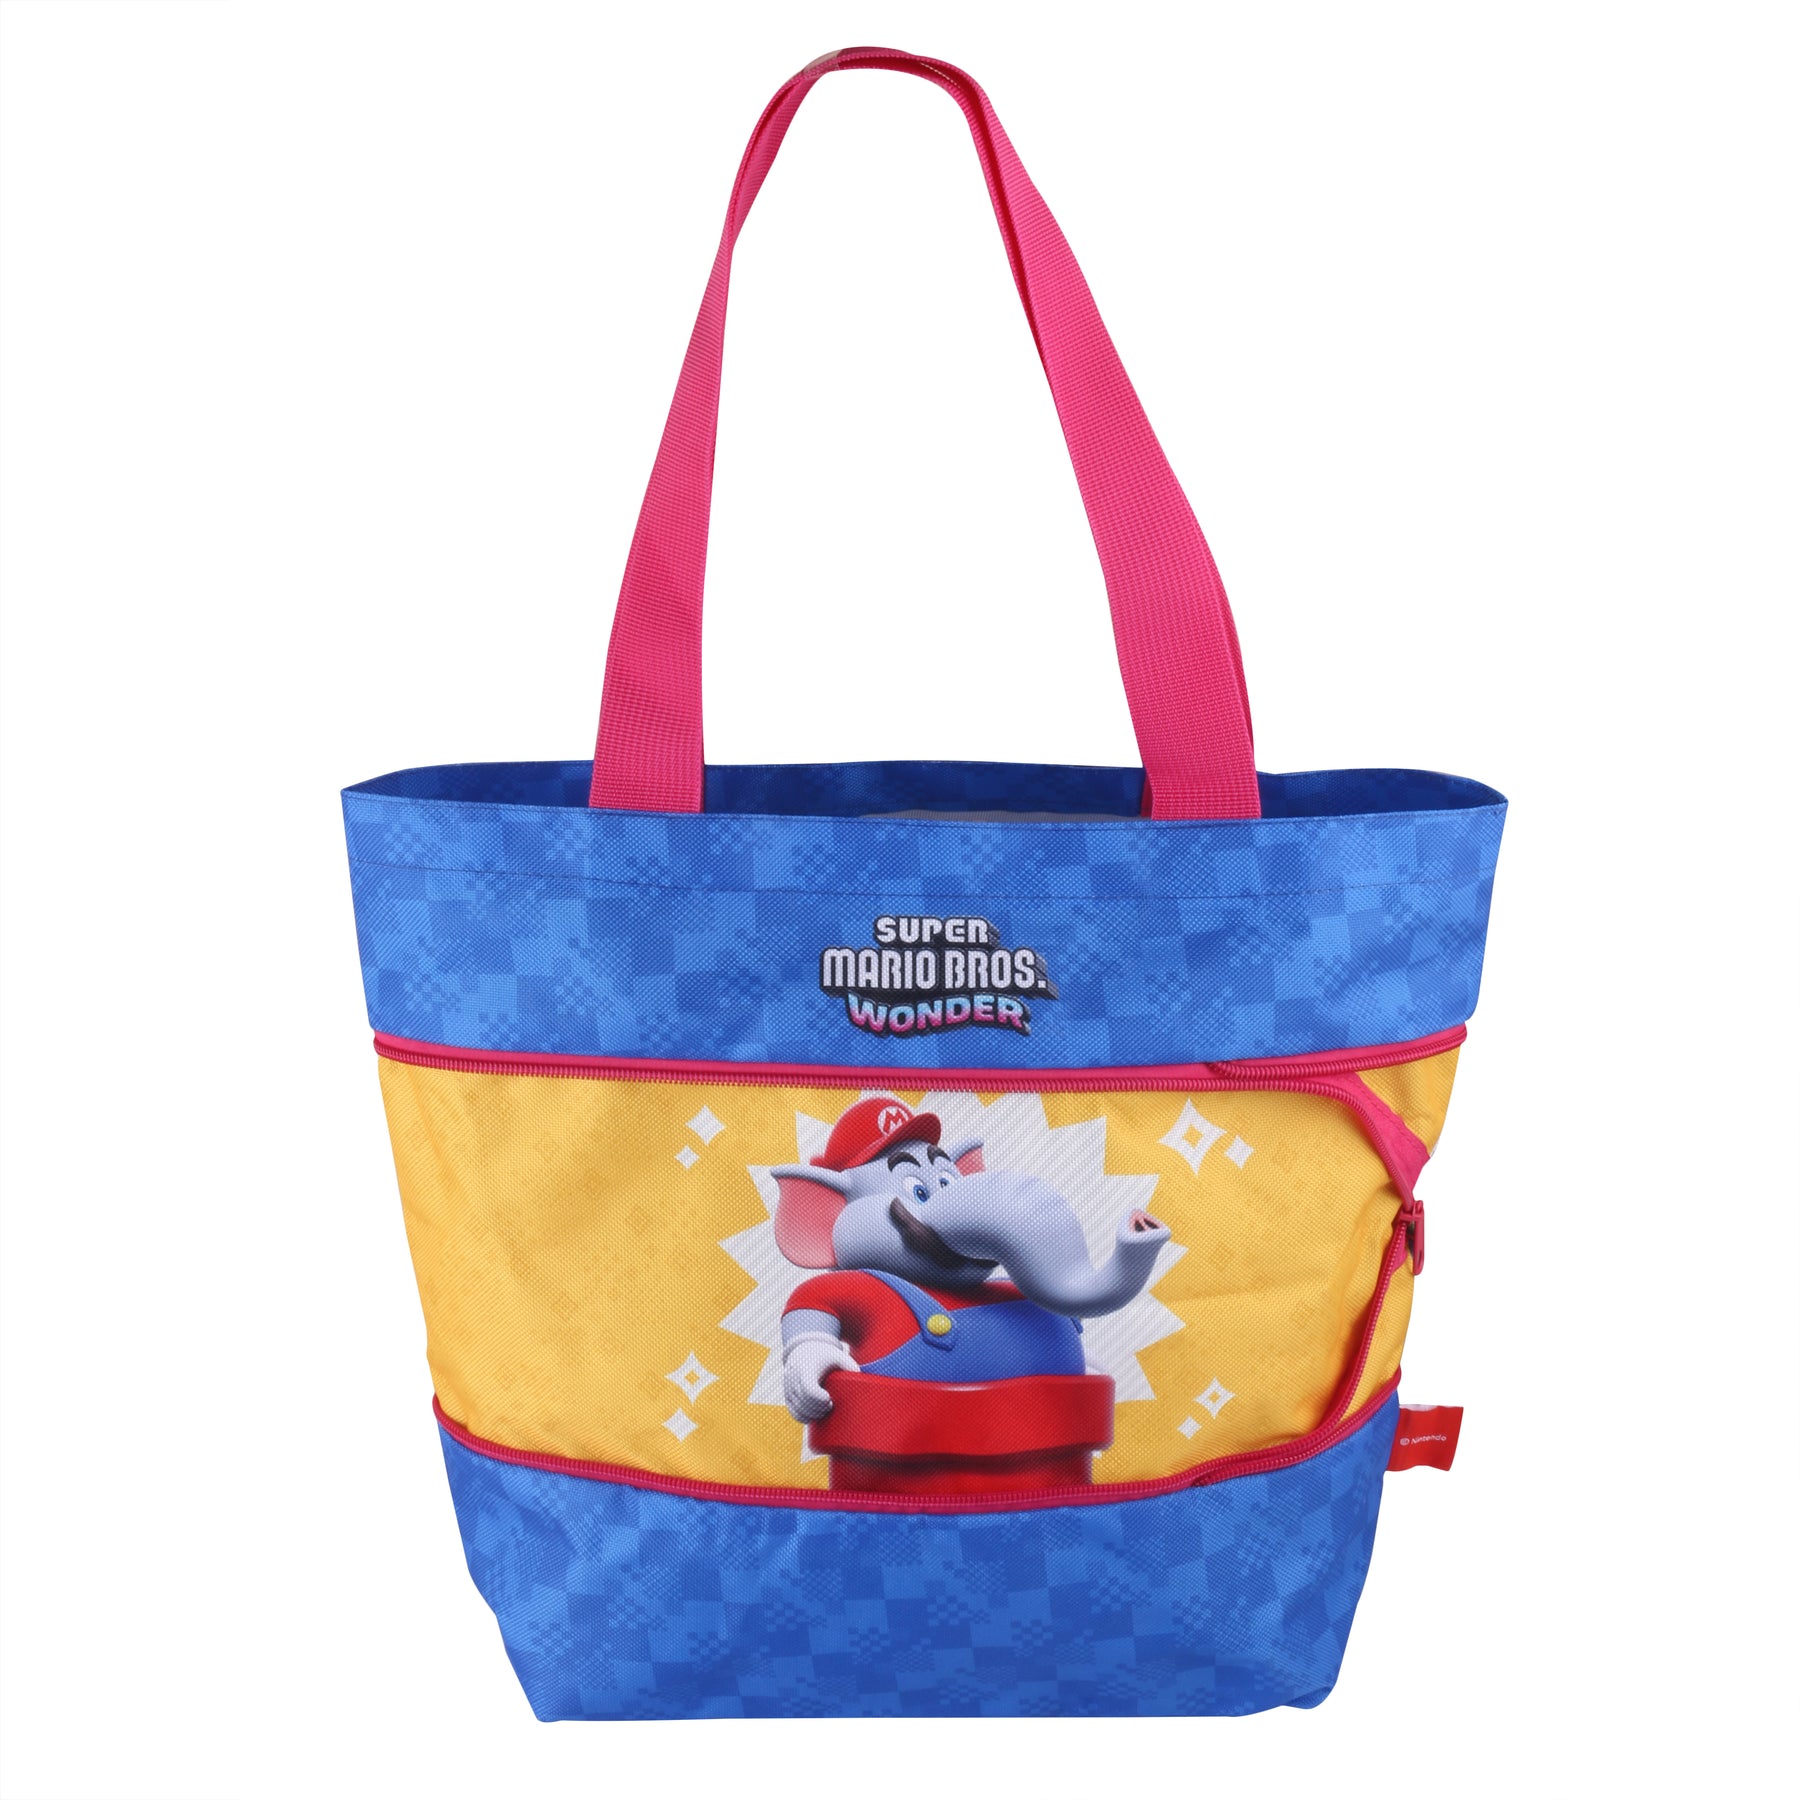 FREE Super Mario Bros. Wonder Tote Bag